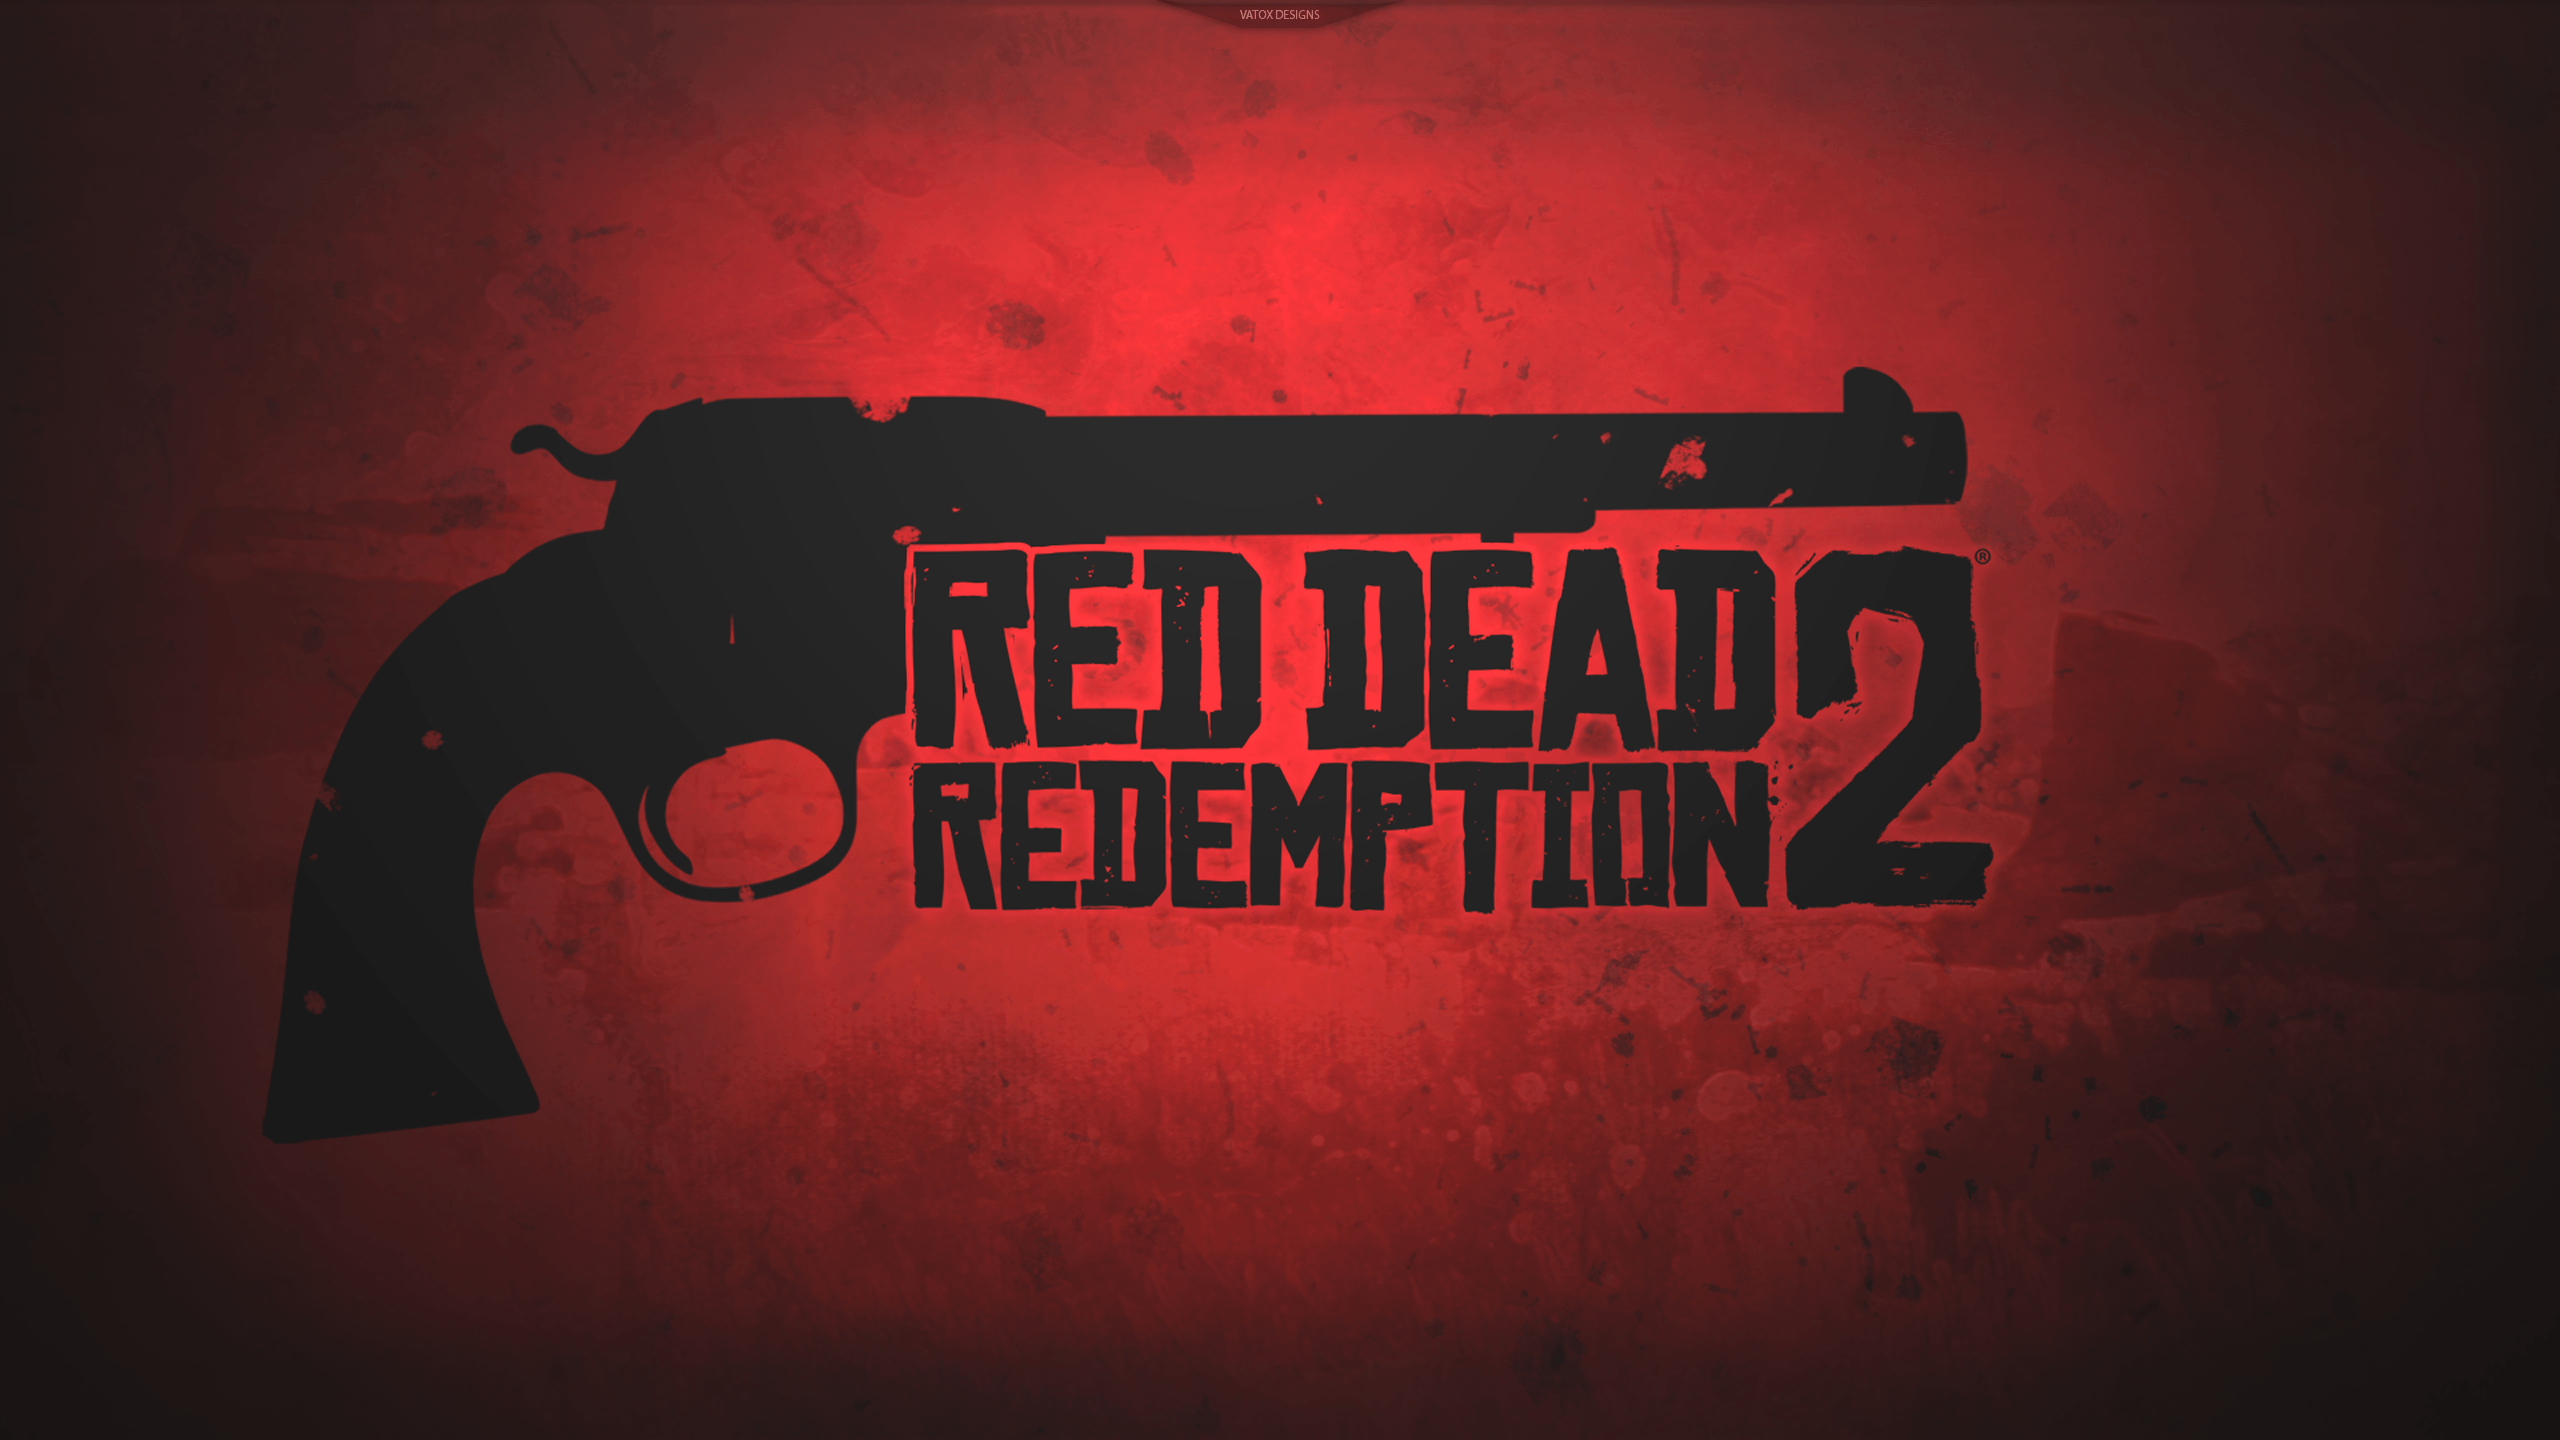 Red Dead Redemption 2 PS4 Review: A Legendary Gunslinger?